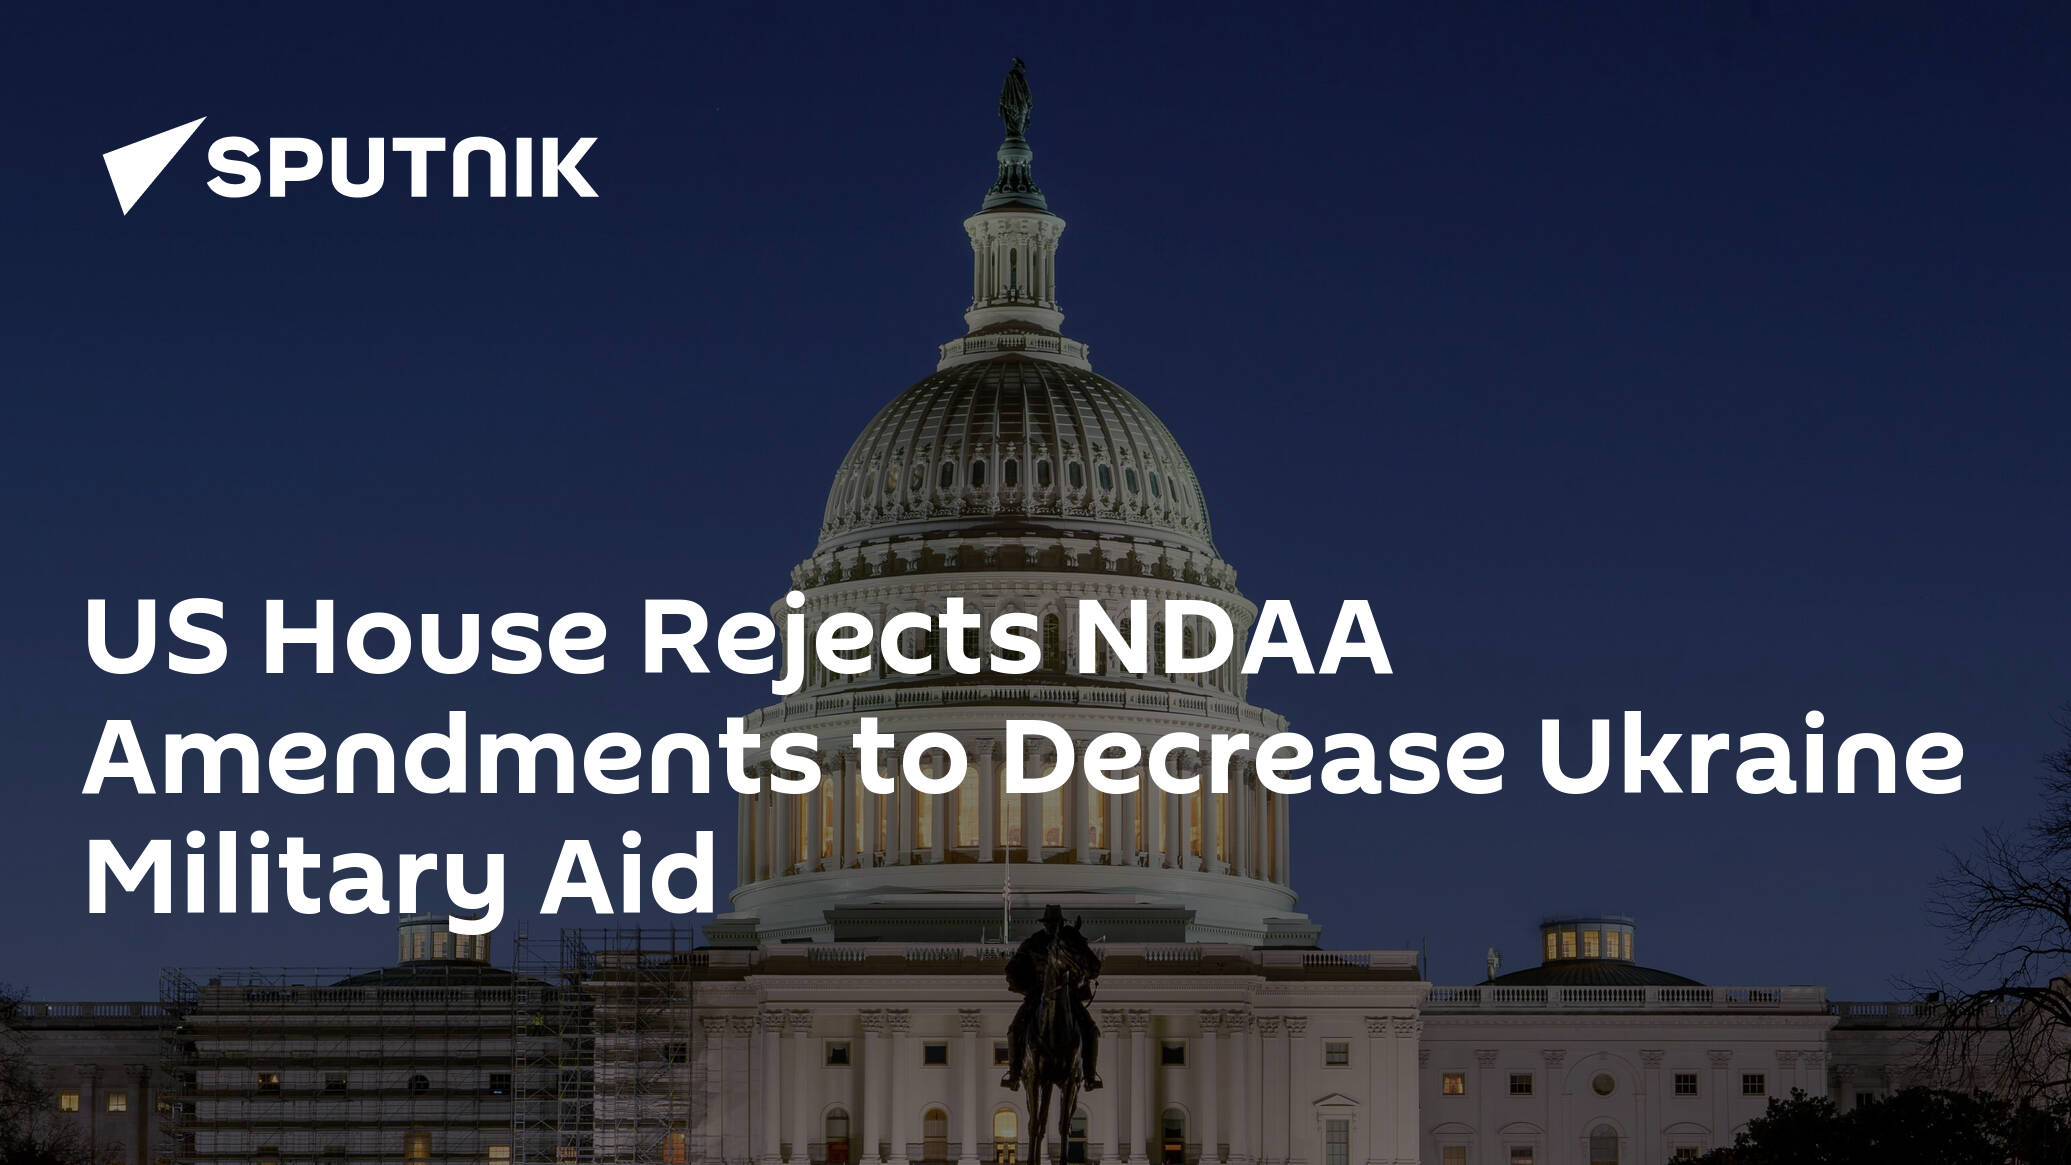 US House Rejects NDAA Amendments to Decrease Aid to Ukraine